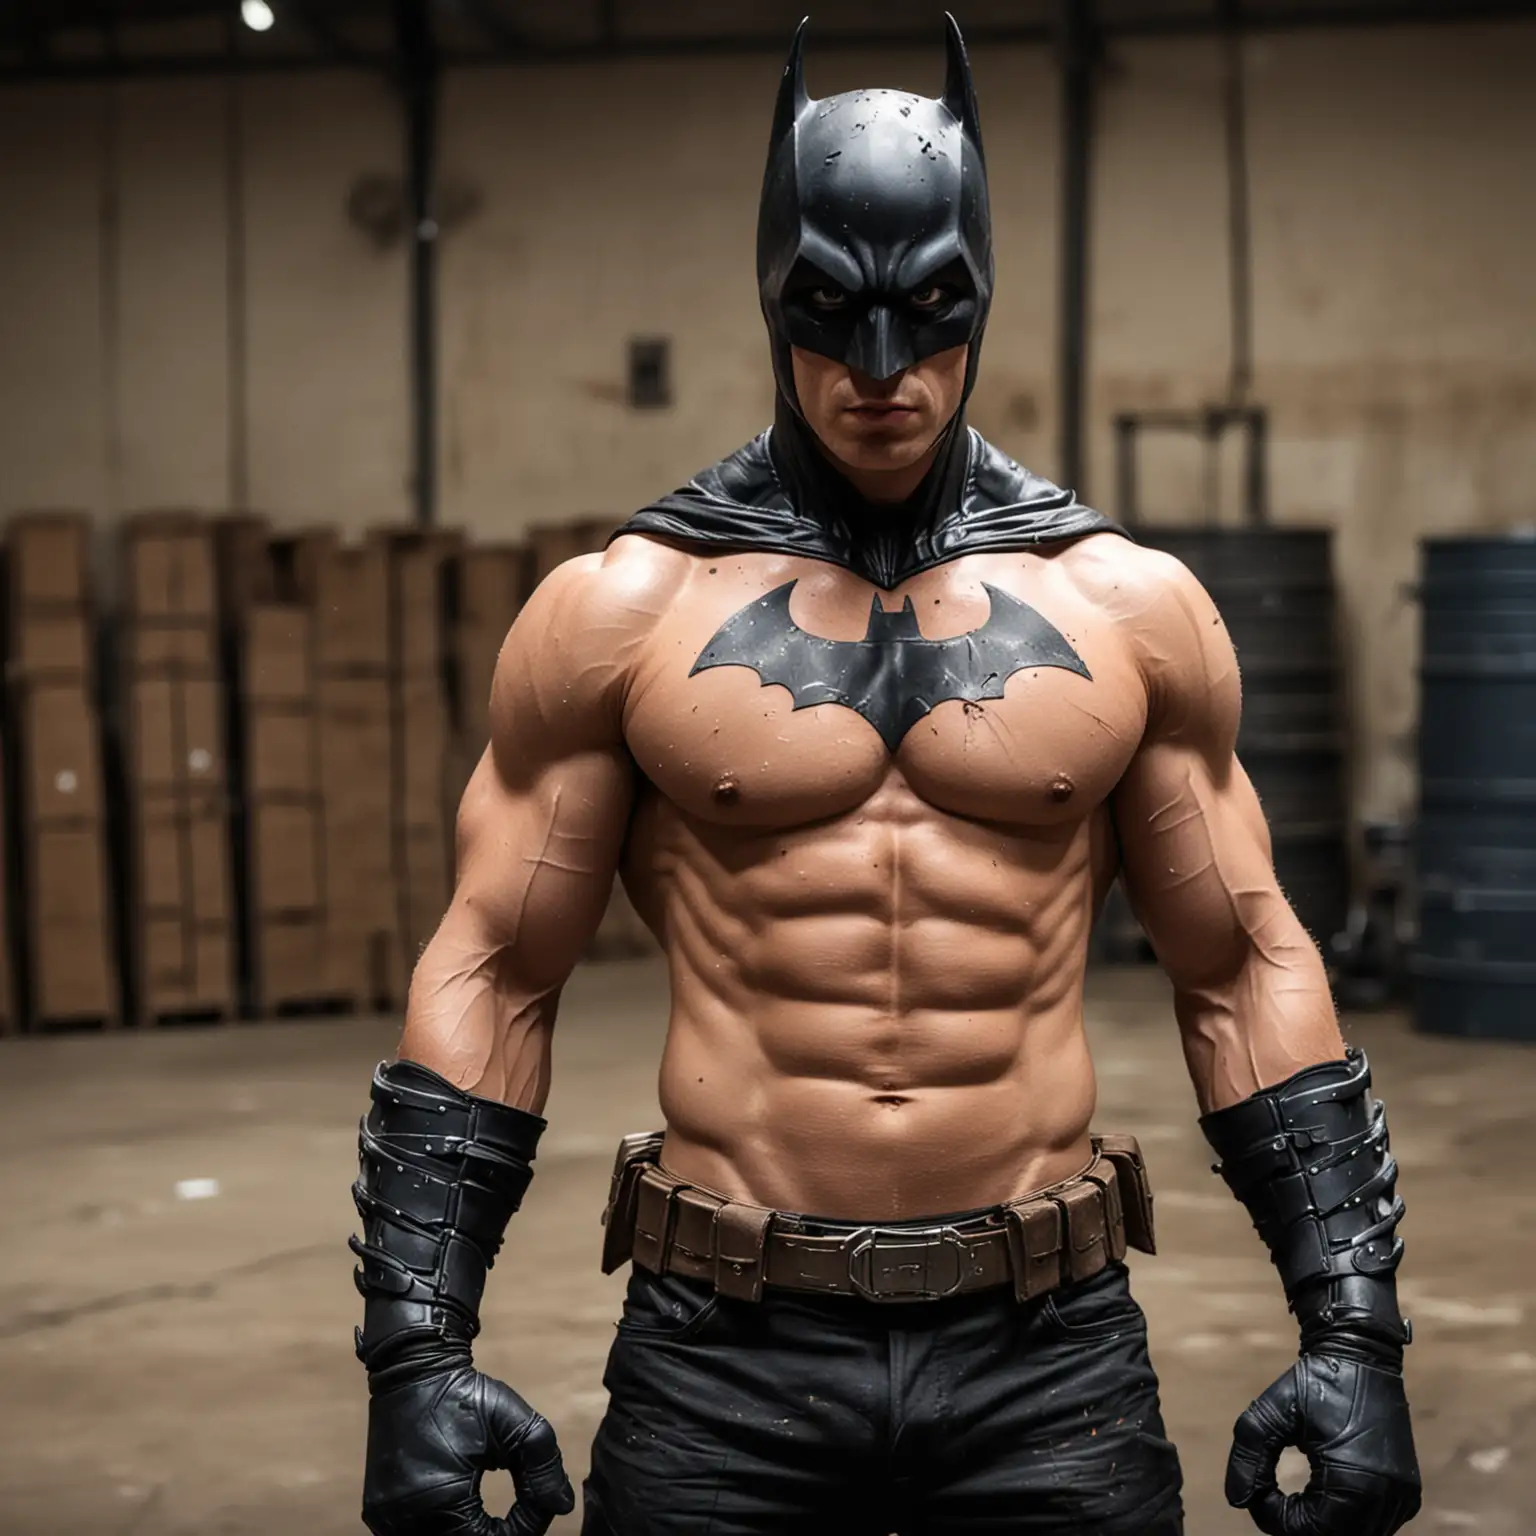 Muscular Batman Battles in Warehouse Showdown